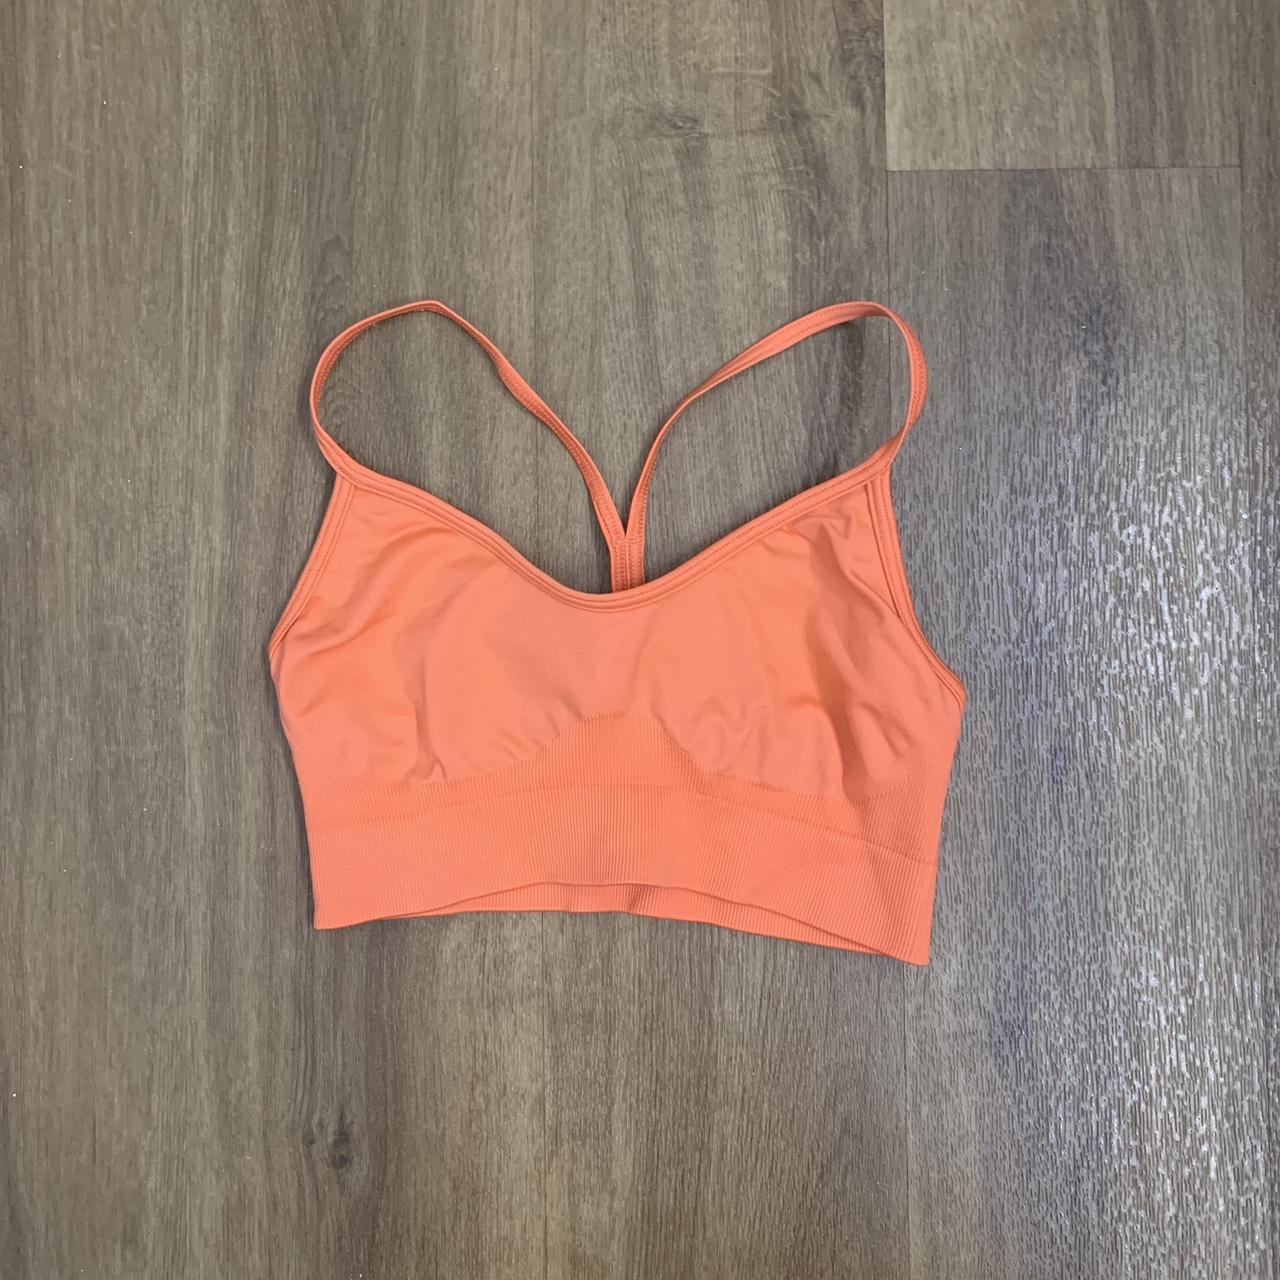 Gymshark Women's Orange Bra | Depop